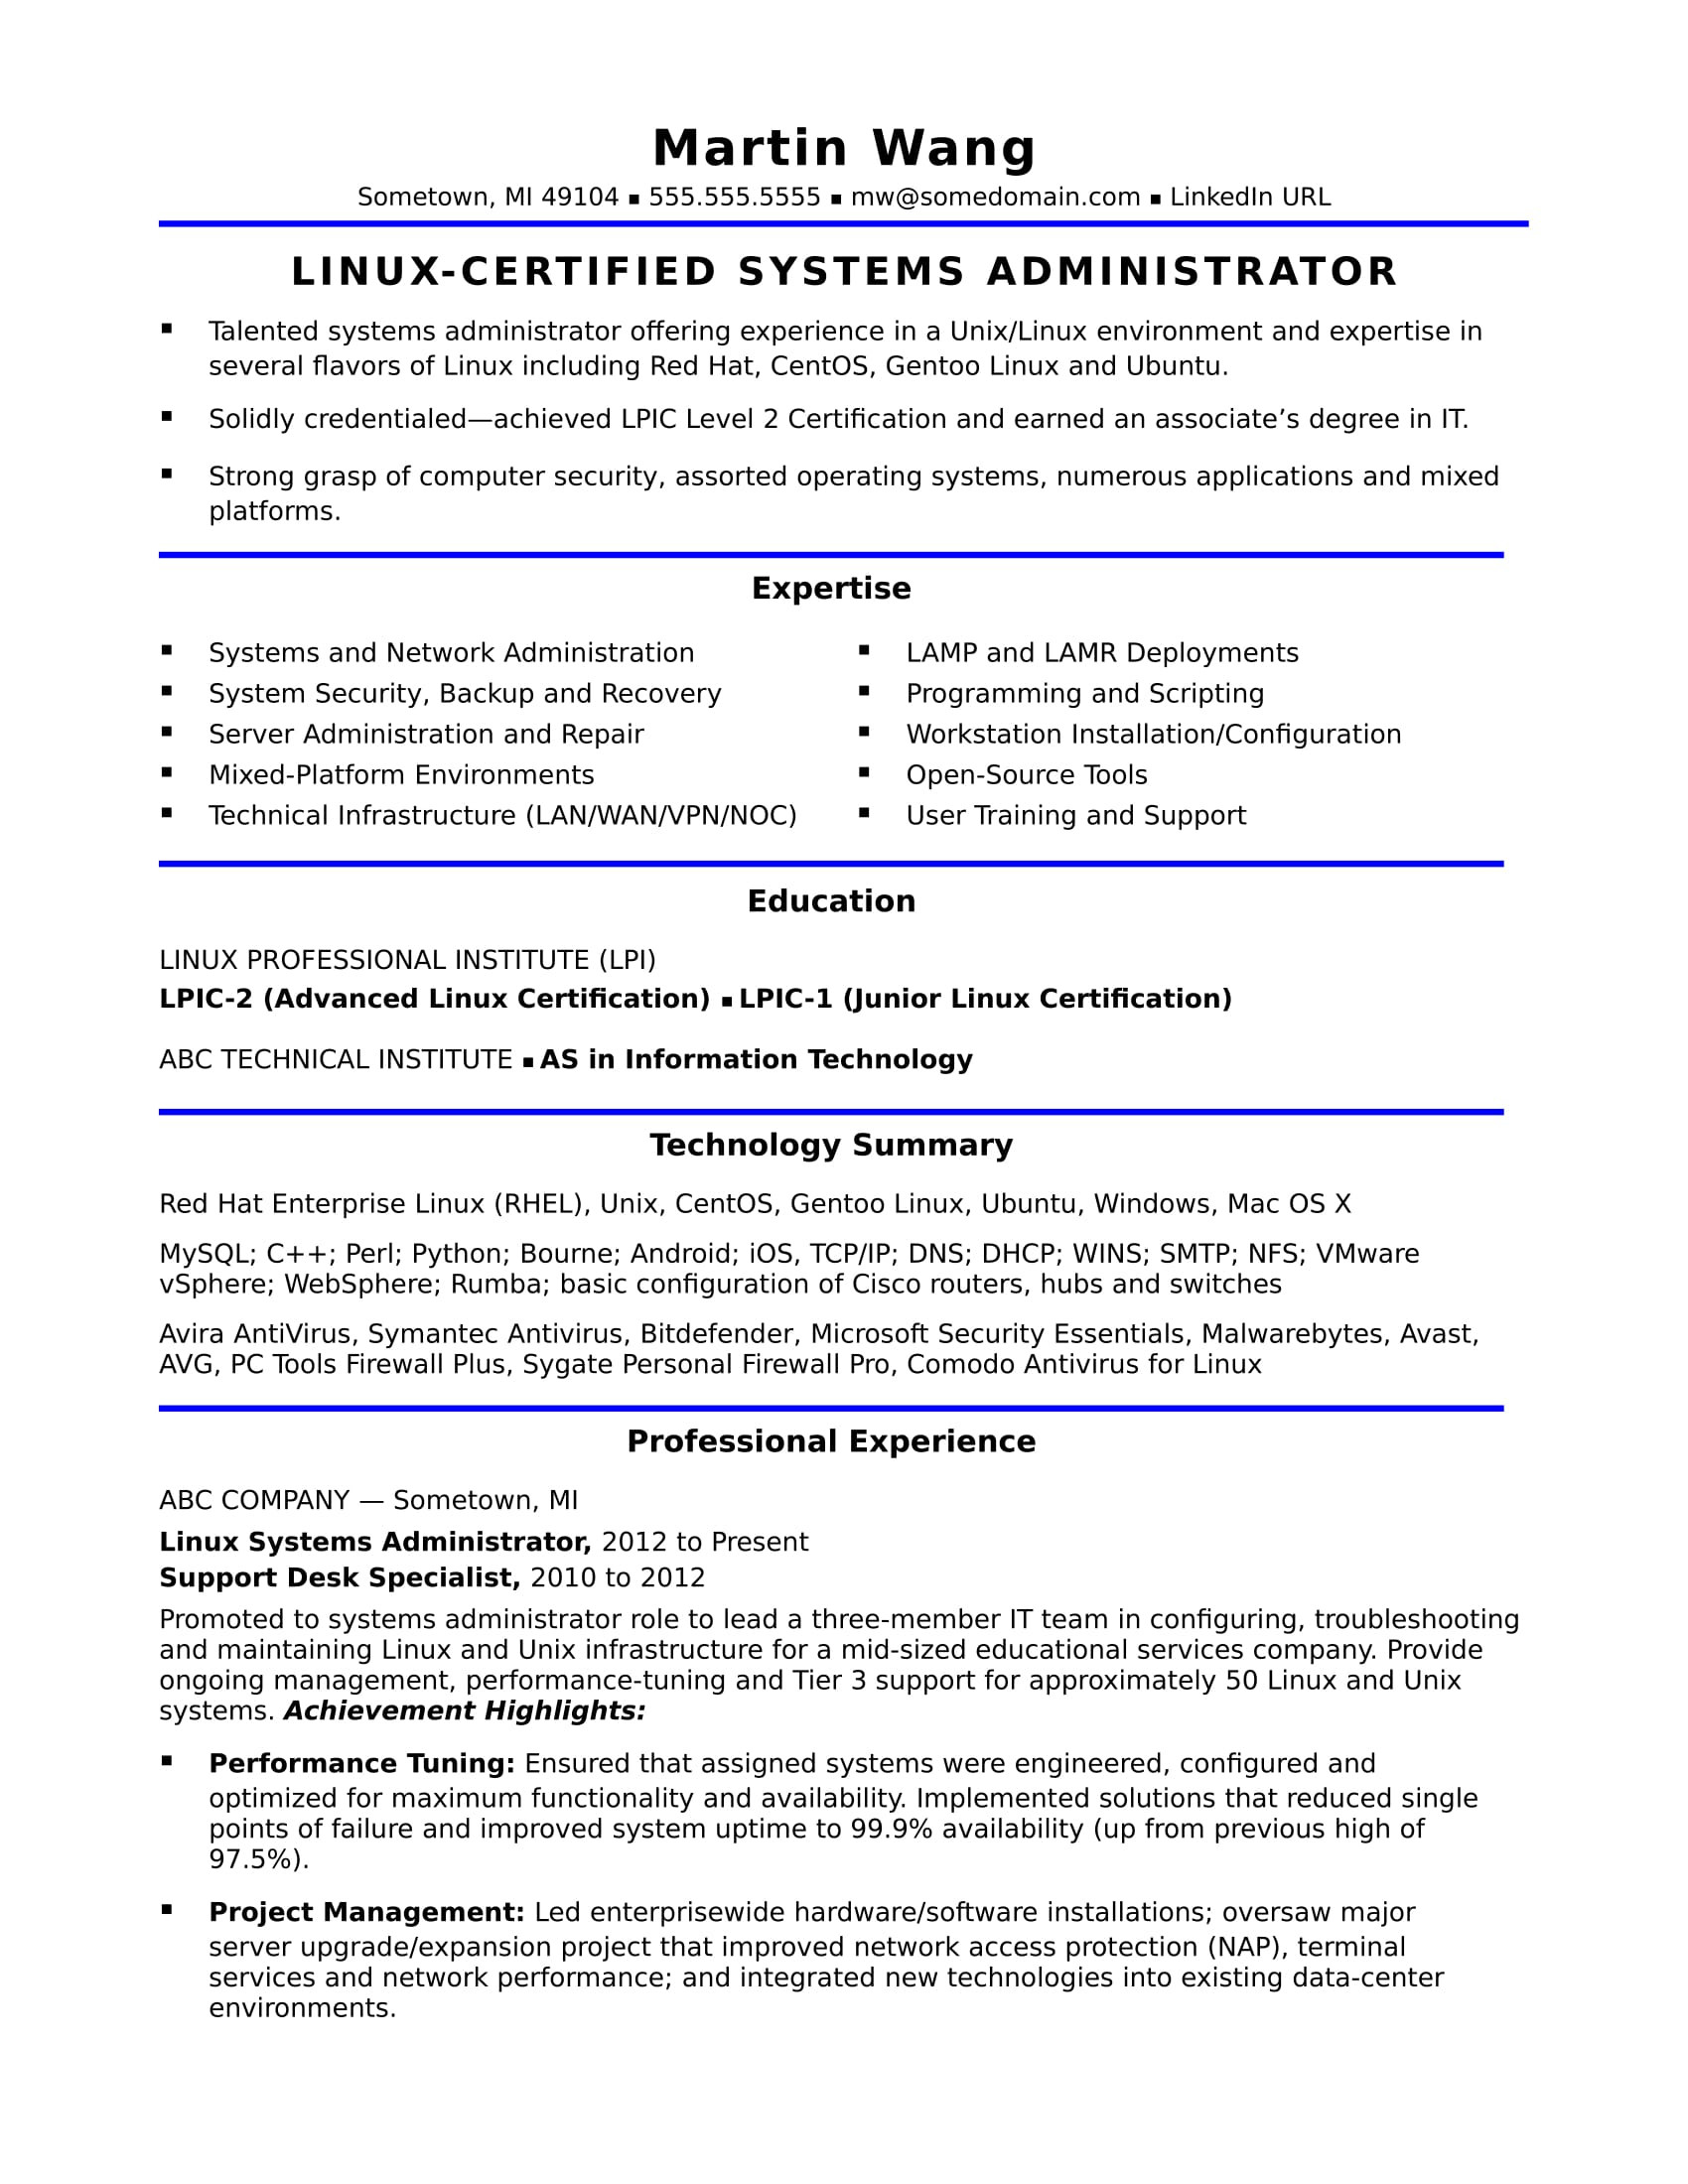 Red Hat Linux Administrator Sample Resume Sample Resume for A Midlevel Systems Administrator Monster.com